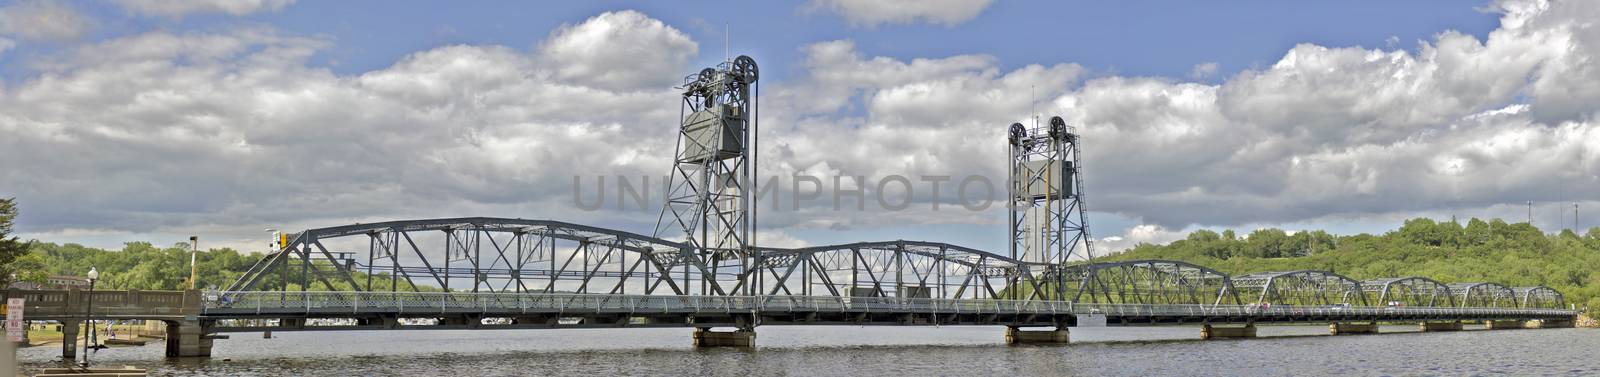 The Stillwater lift bridge, shot in high dynamic range.